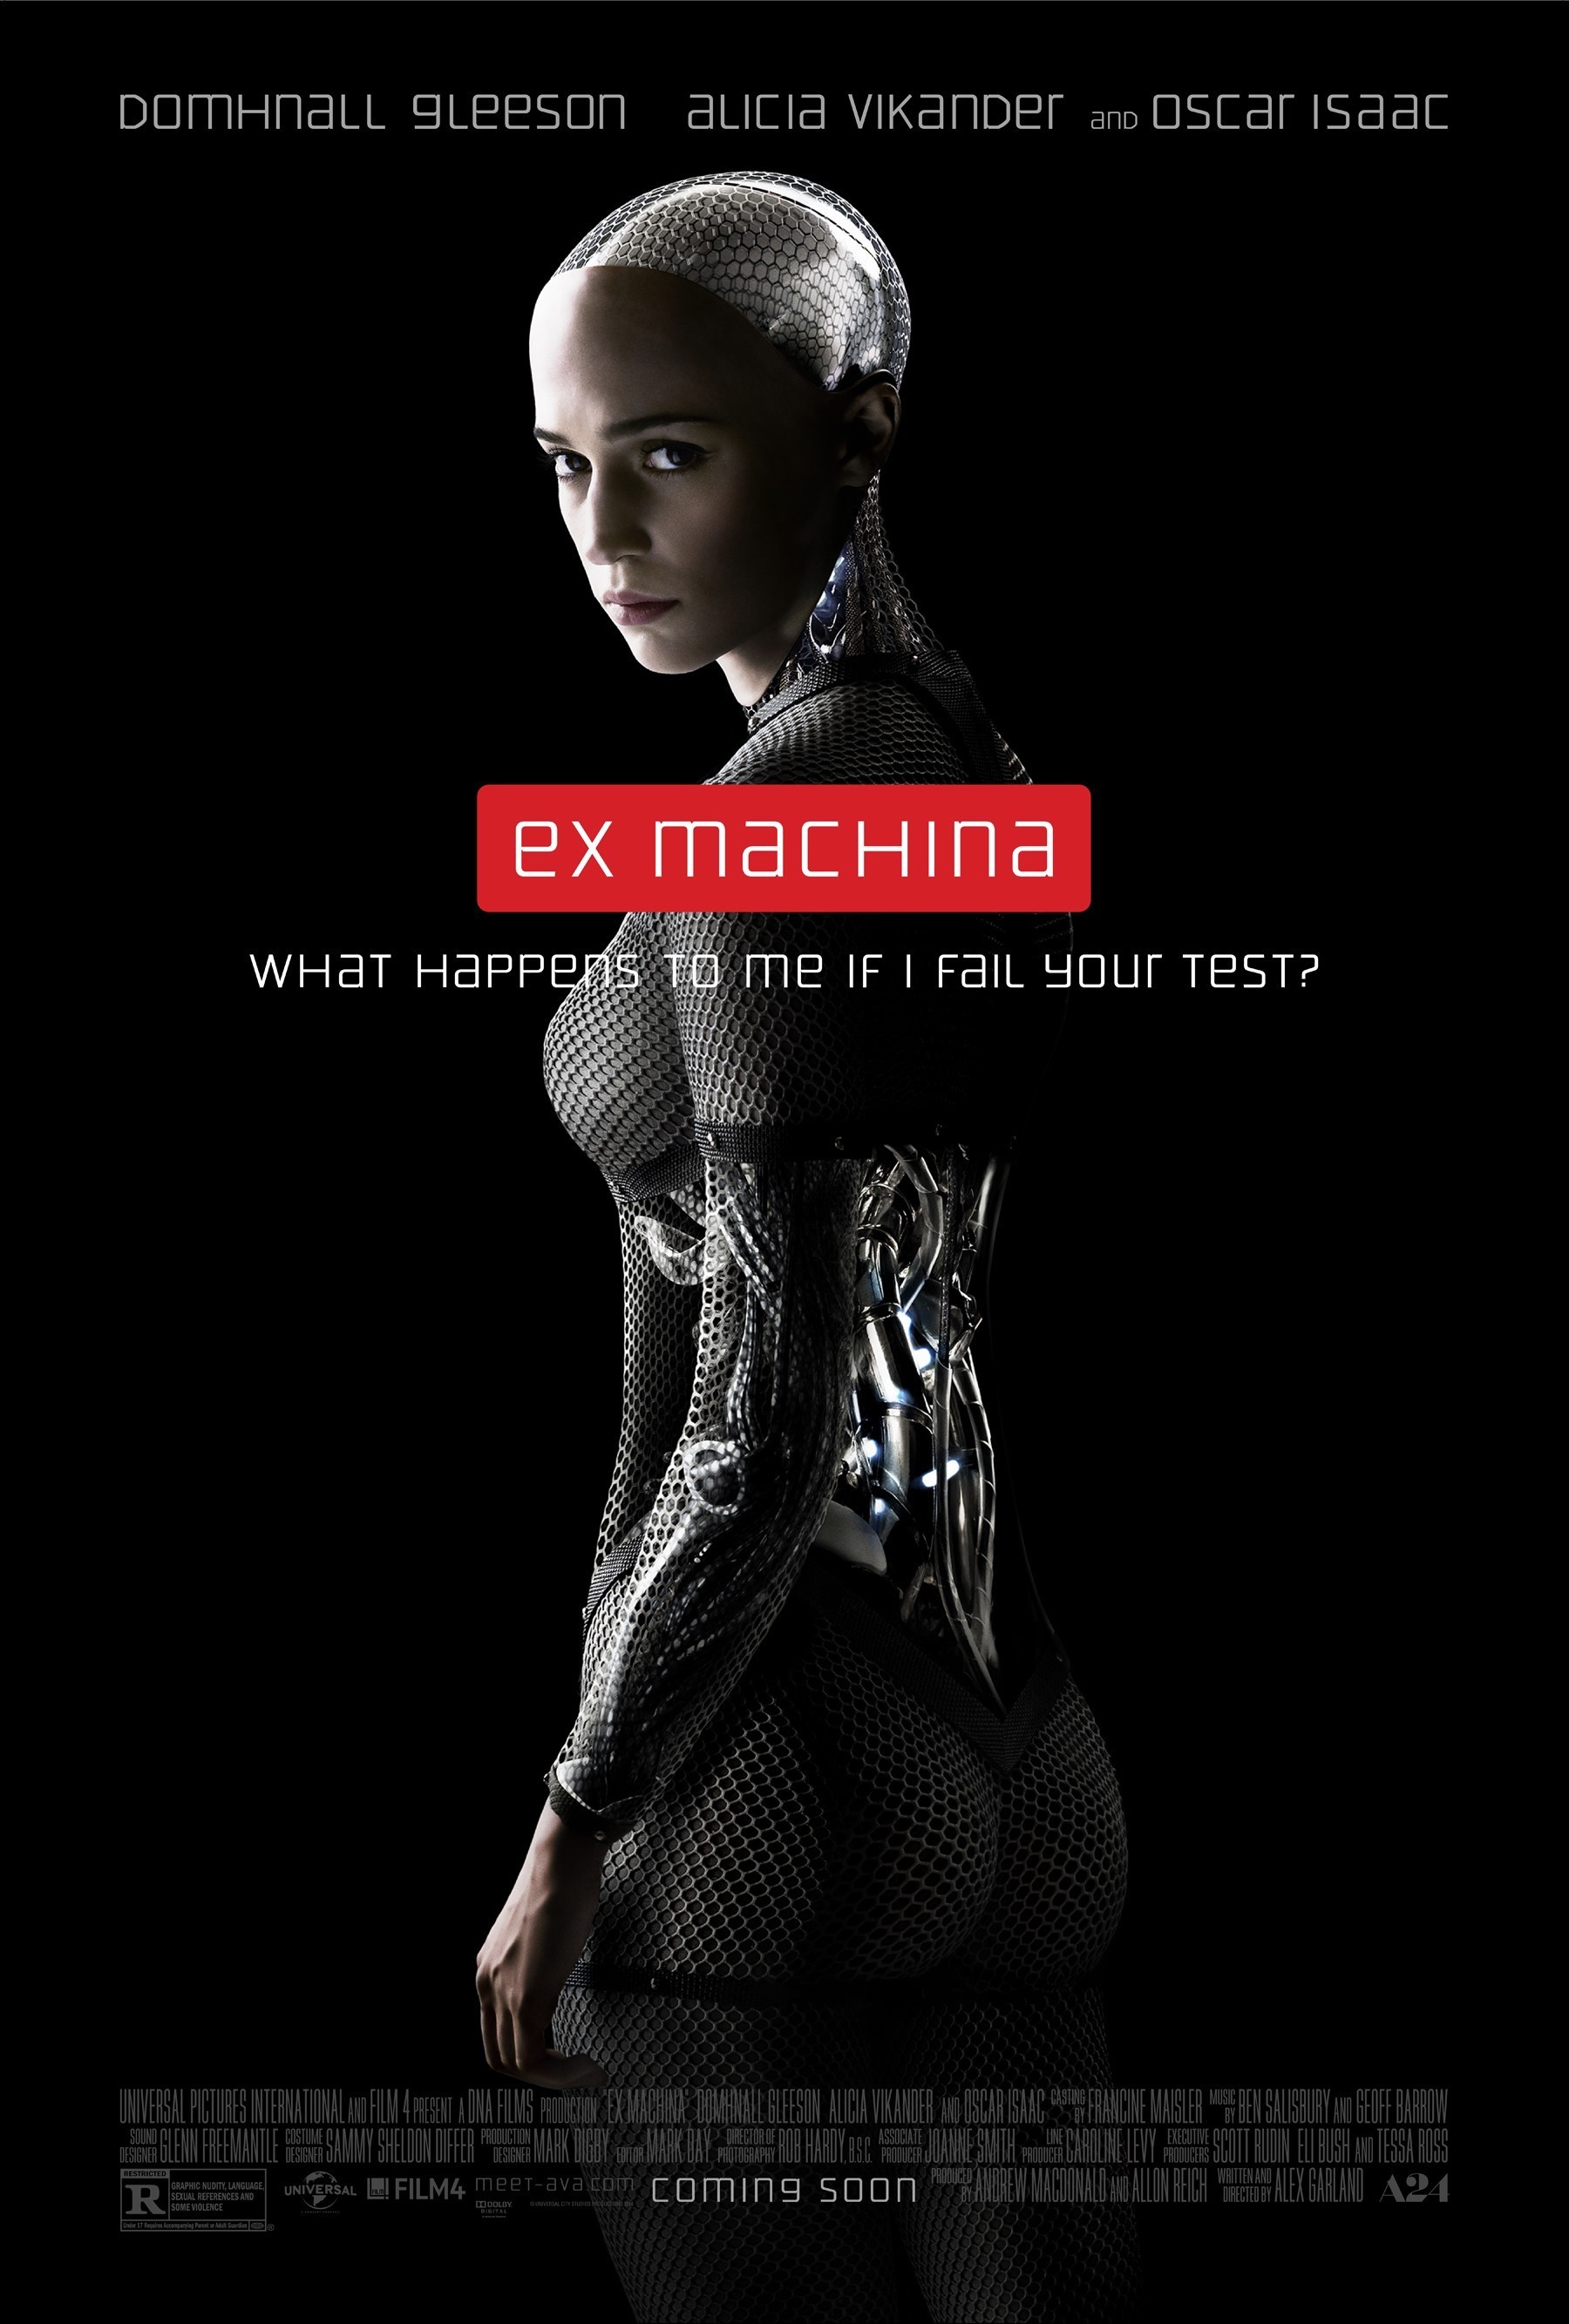 Alicia Vikander: Ava | Ex Machina | Alex Garland, 2015 / Movie Poster